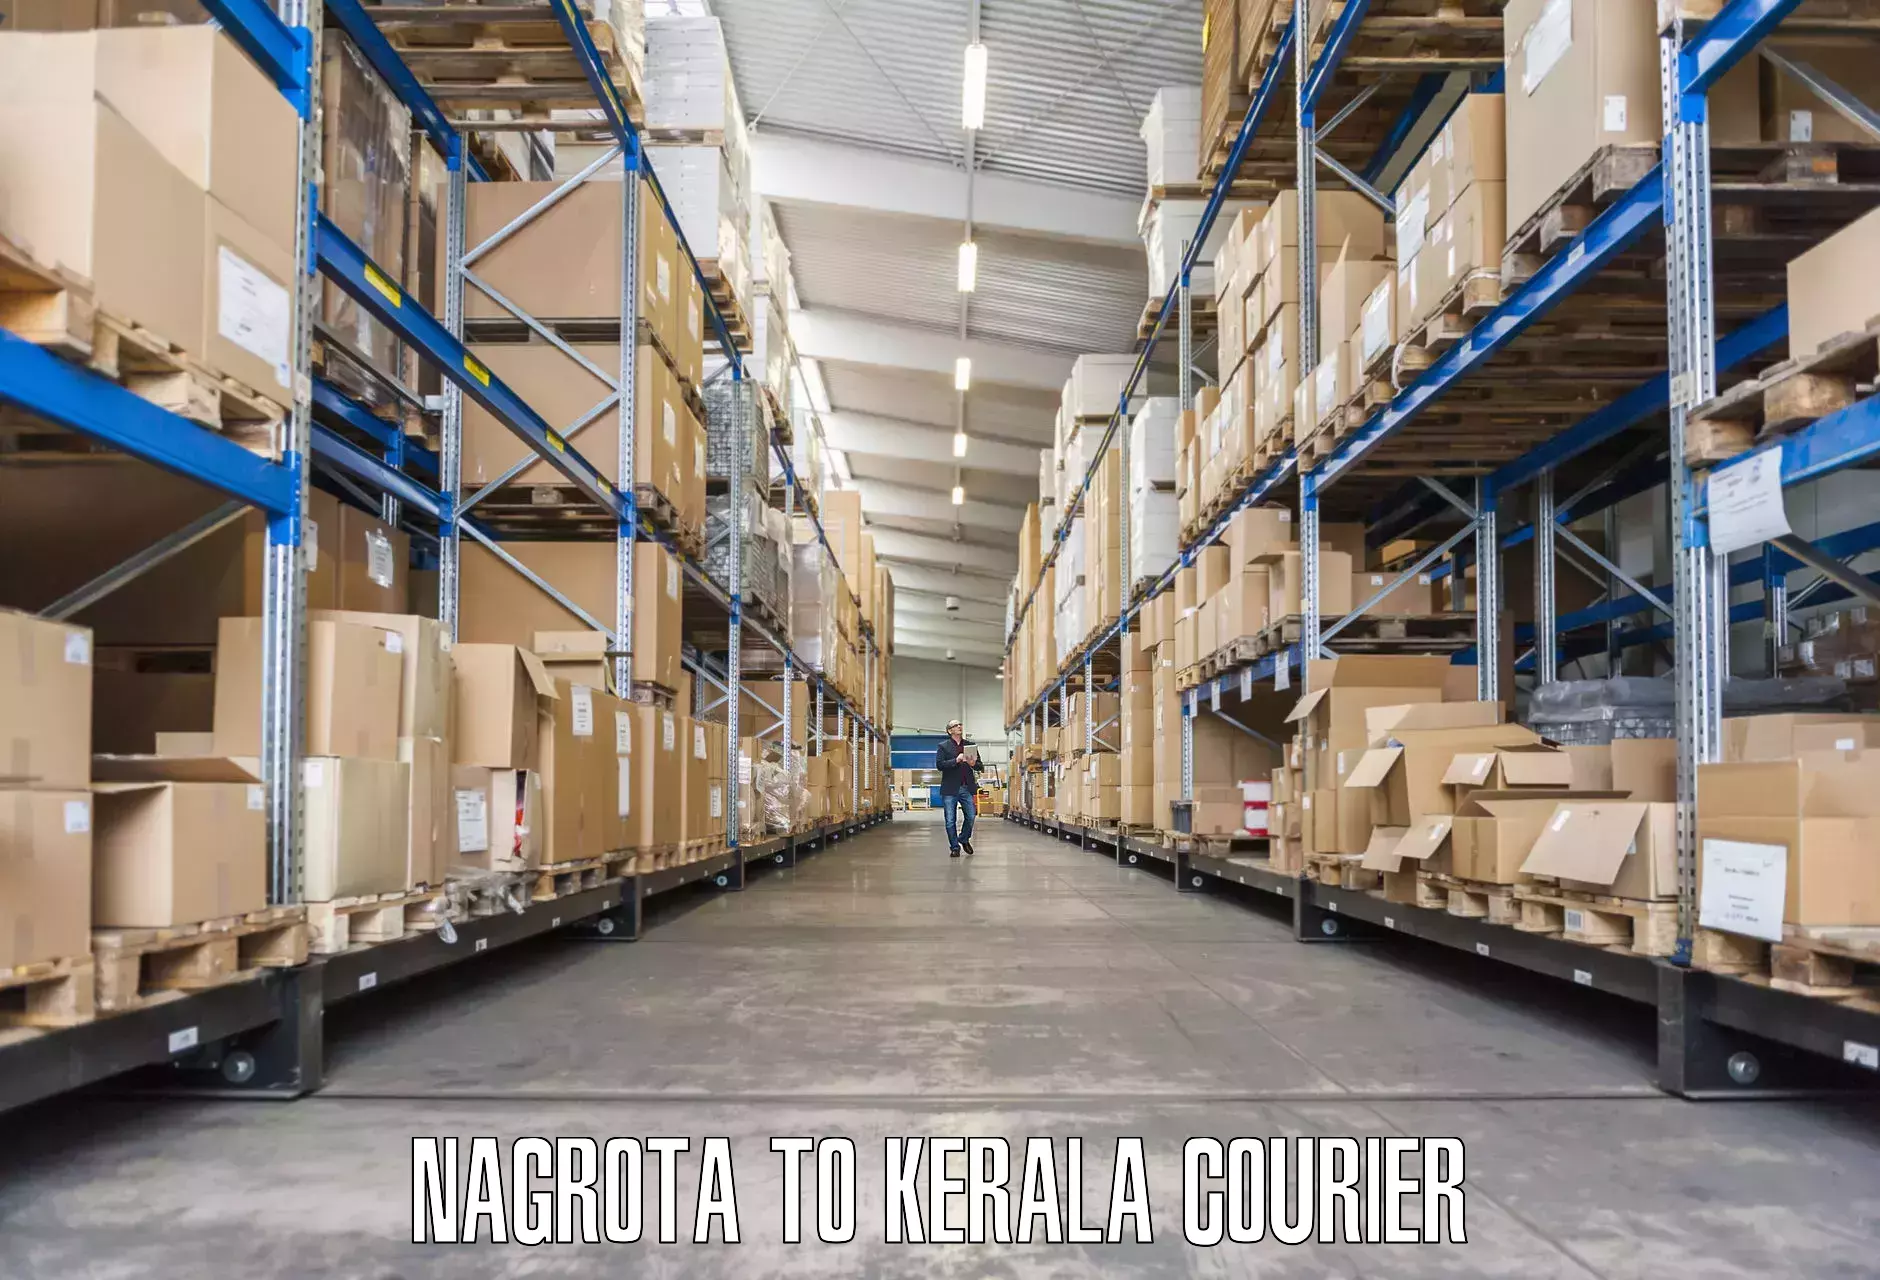 Professional moving company Nagrota to Kerala